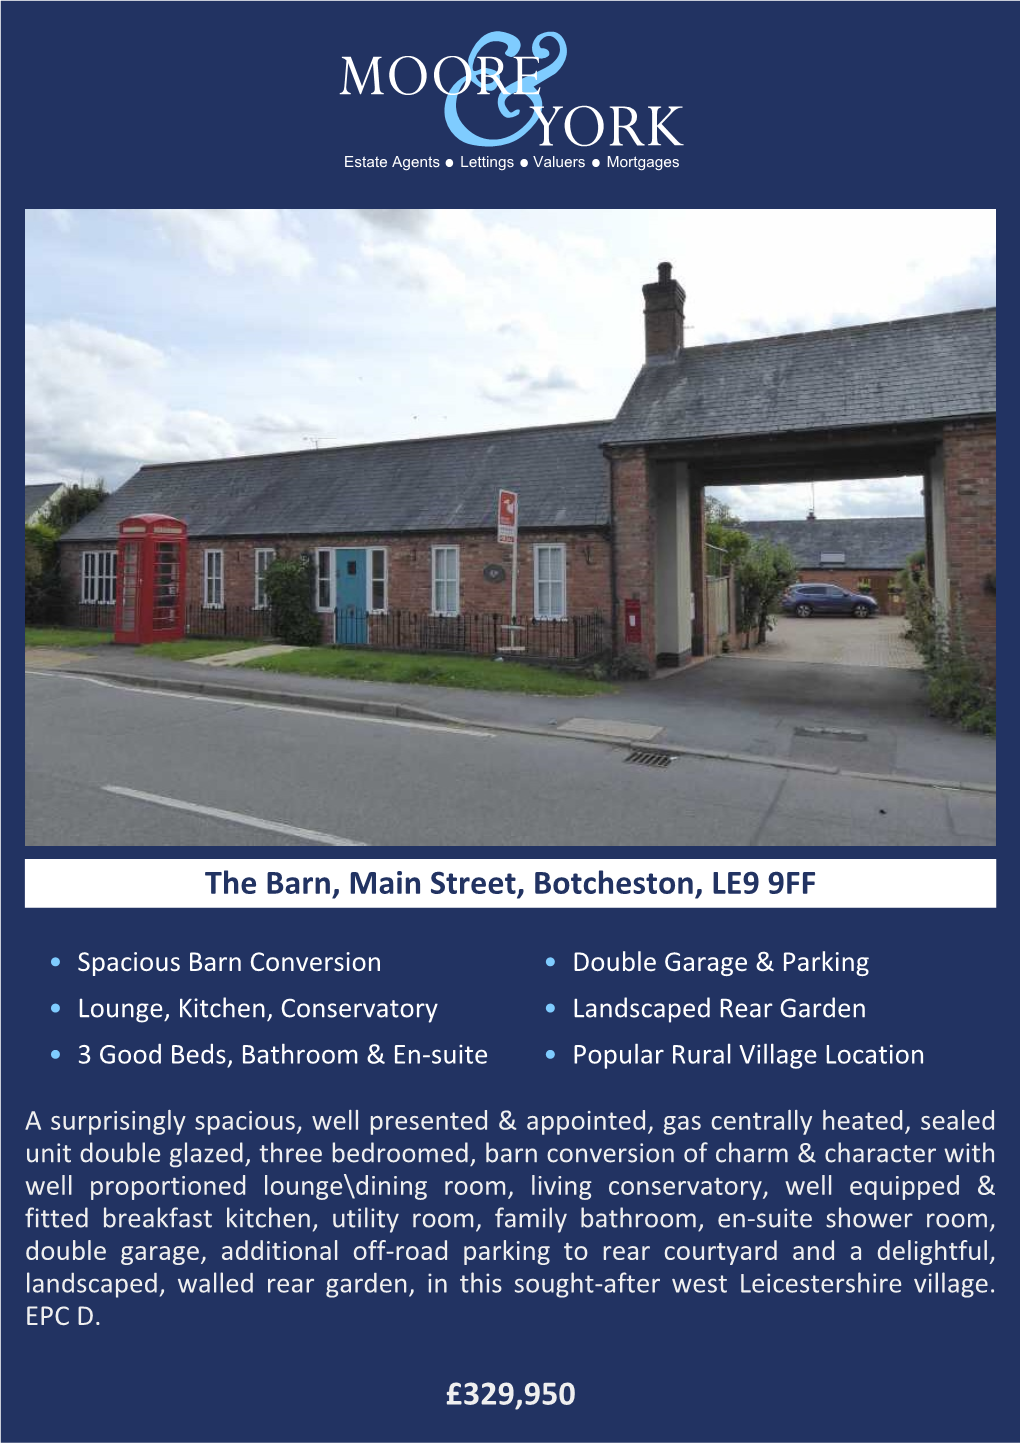 £329,950 the Barn, Main Street, Botcheston, LE9